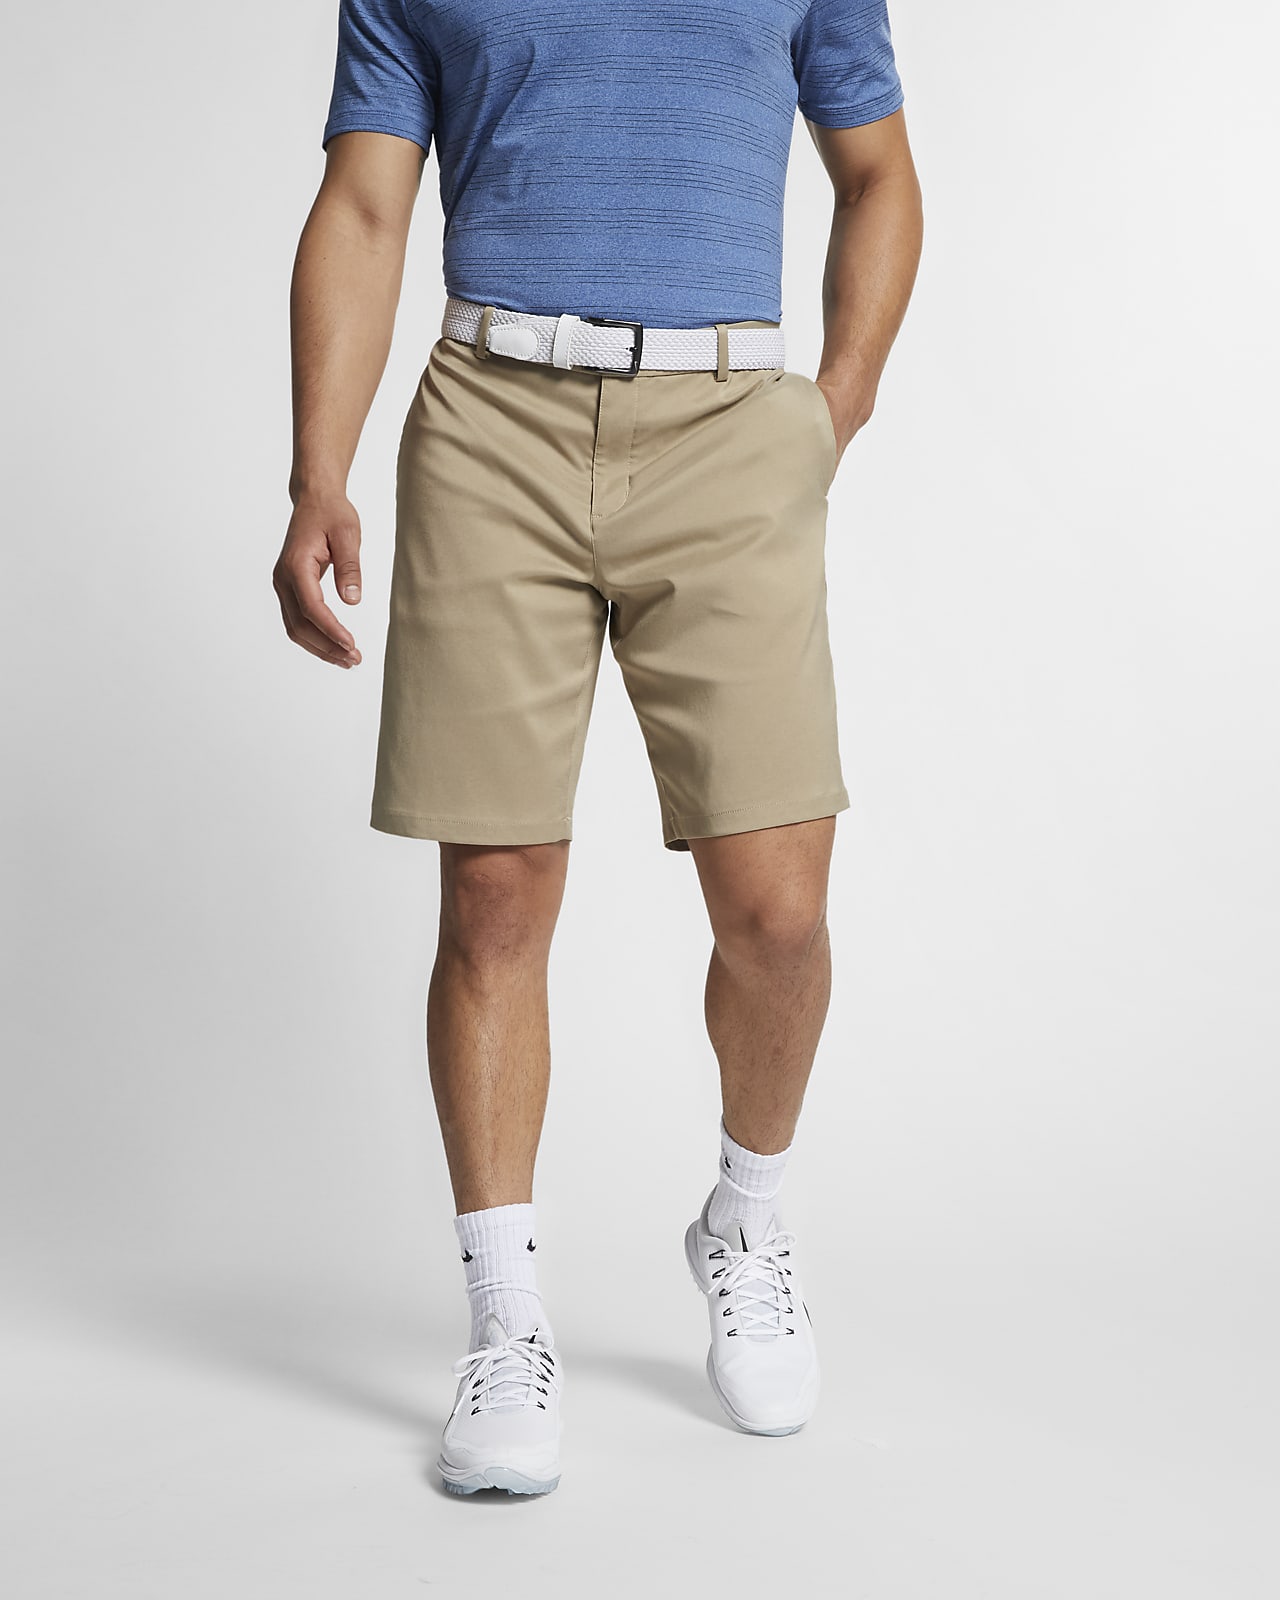 nike men's flex golf shorts